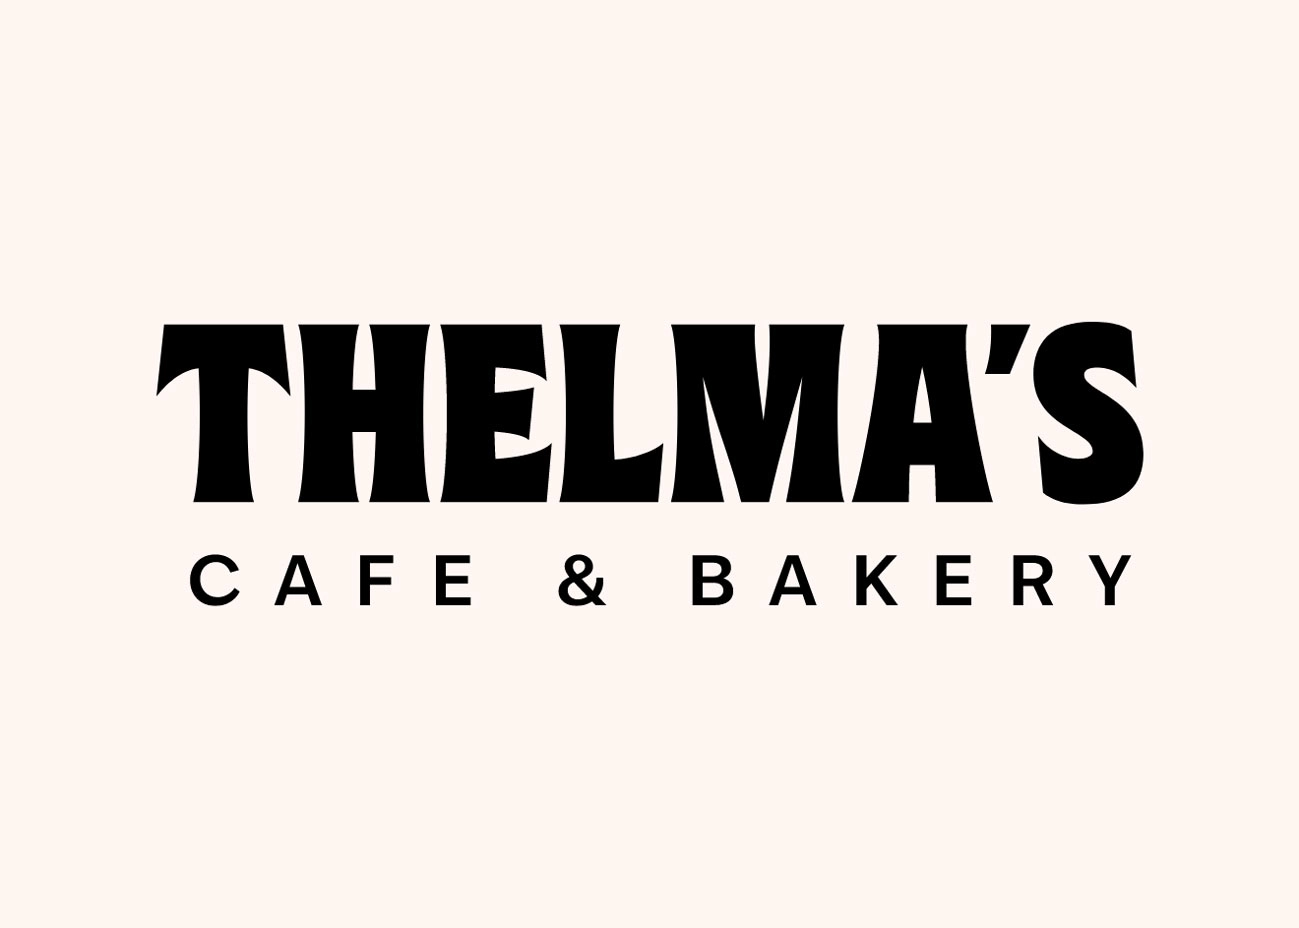 Thelma's Cafe & Bakery logo design by Kaliber Studio